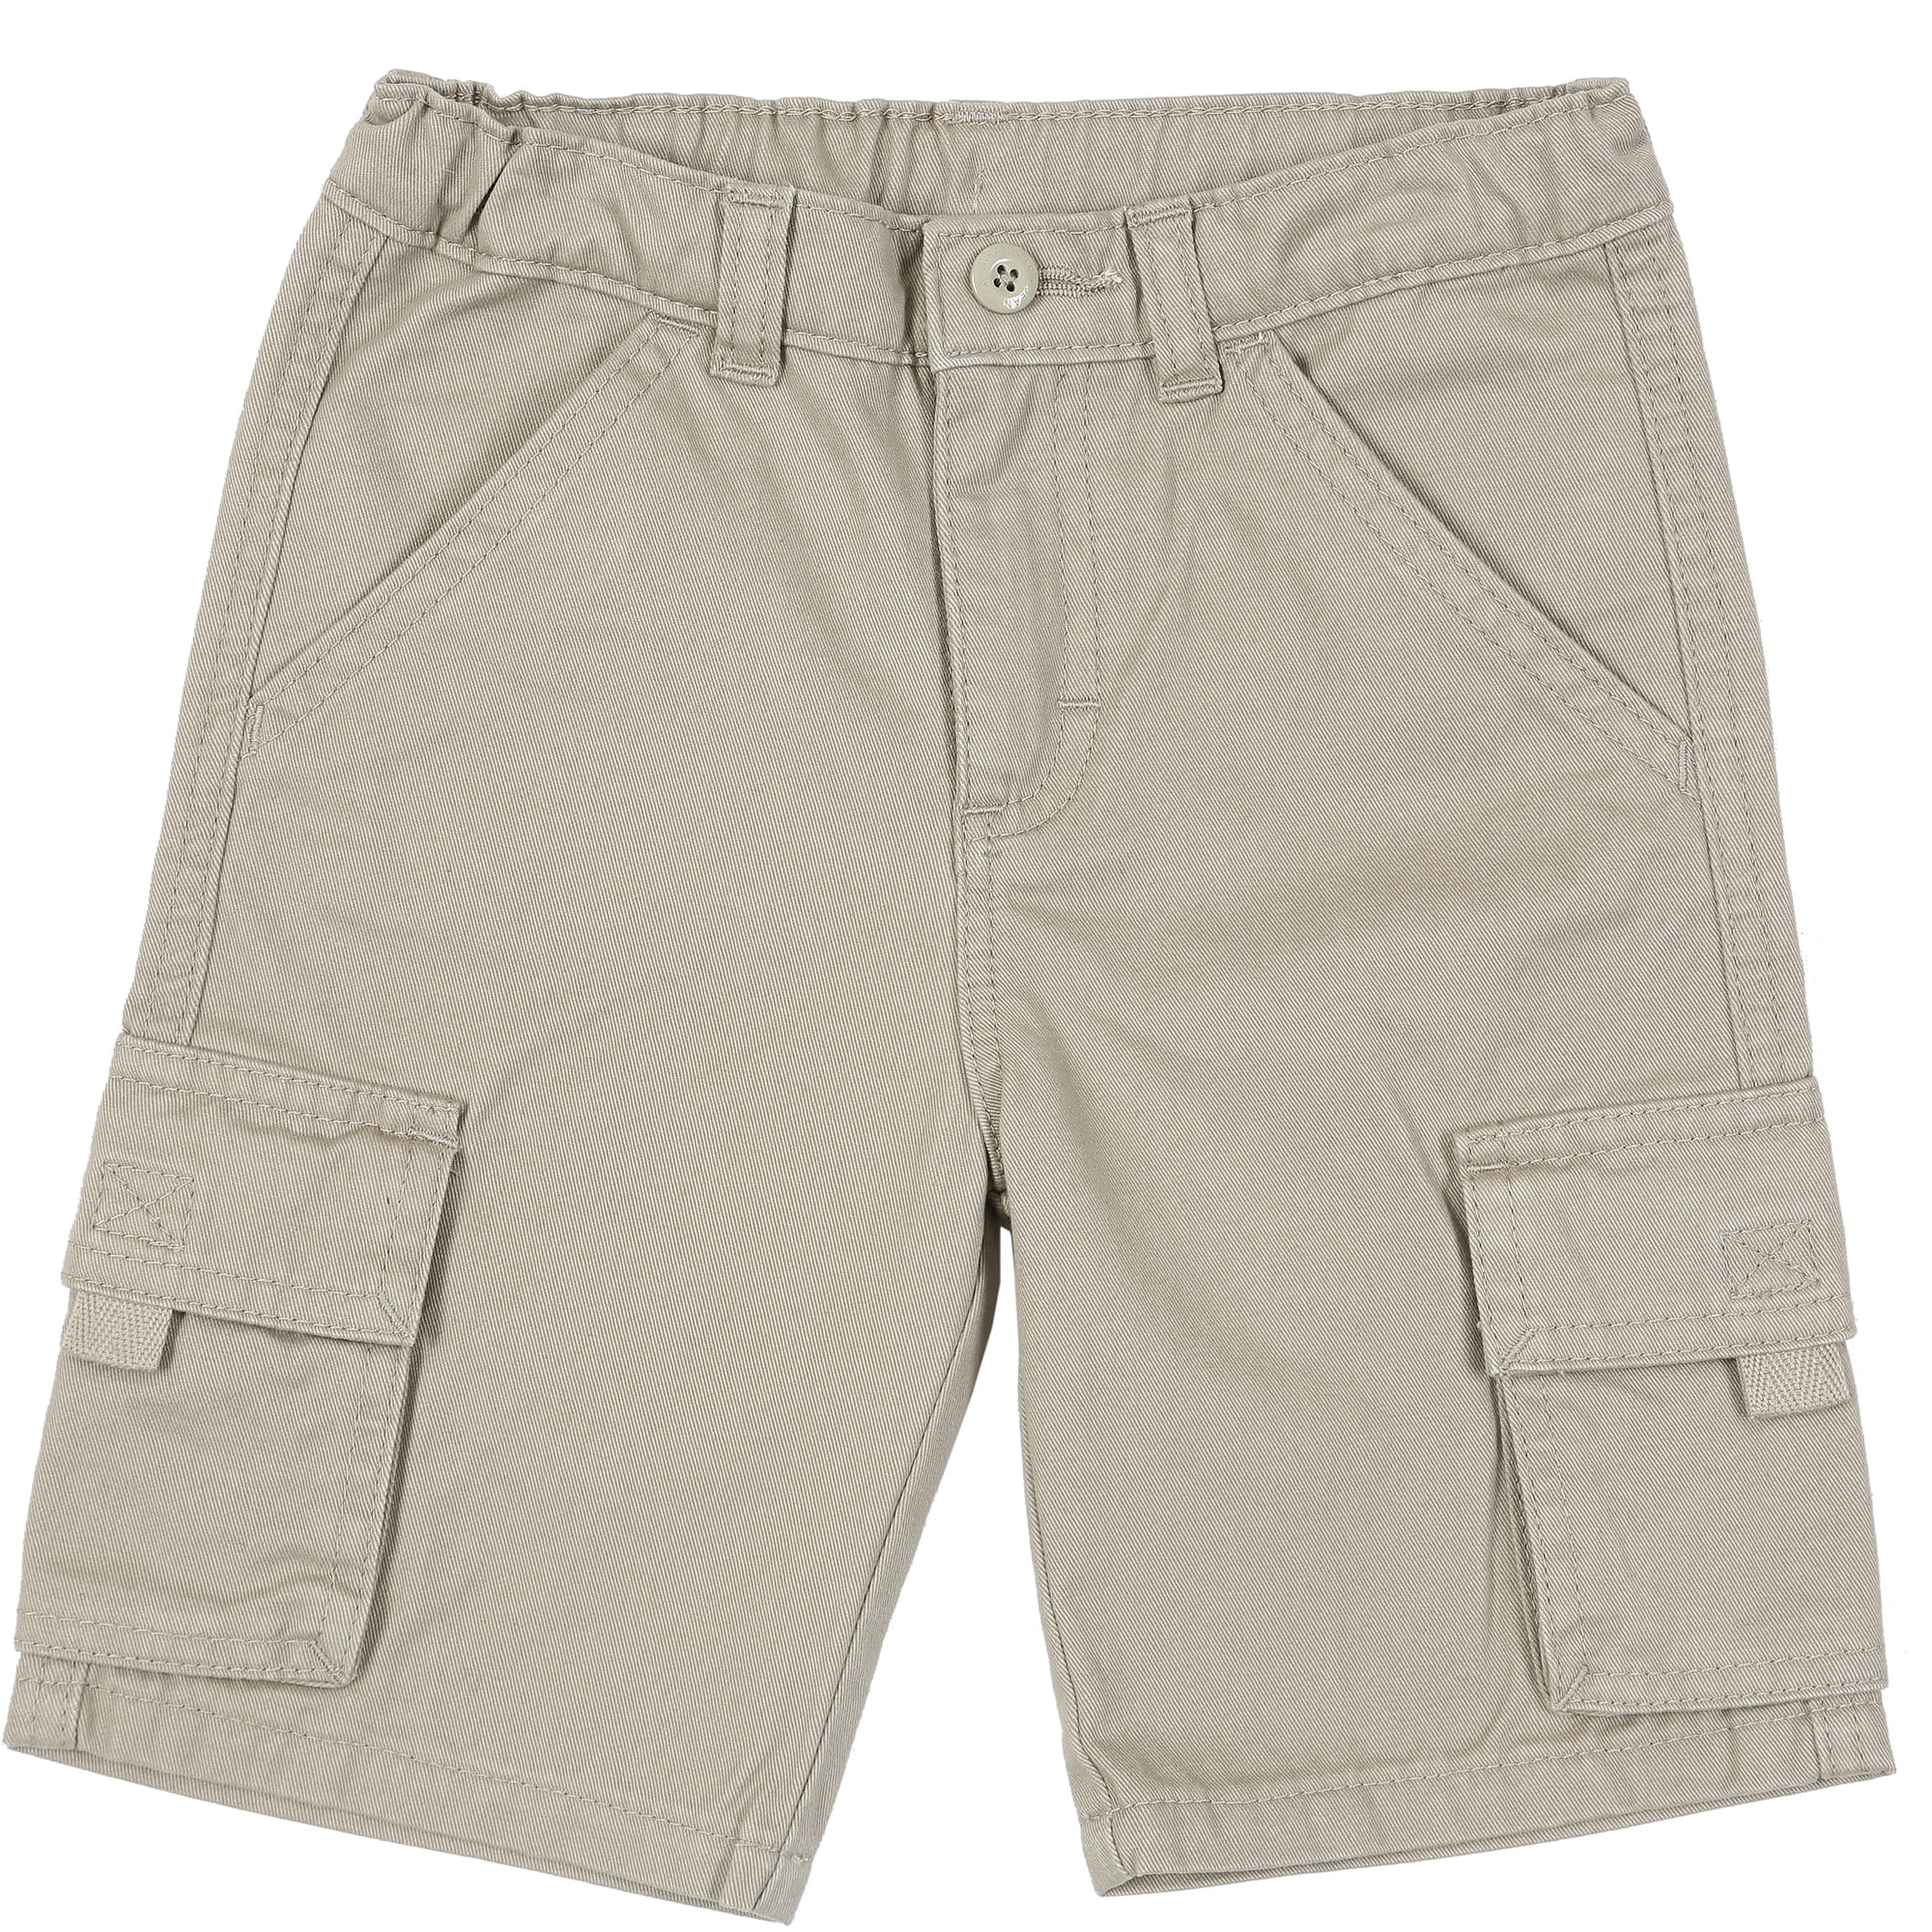 Buy > walmart cargo shorts wrangler > in stock